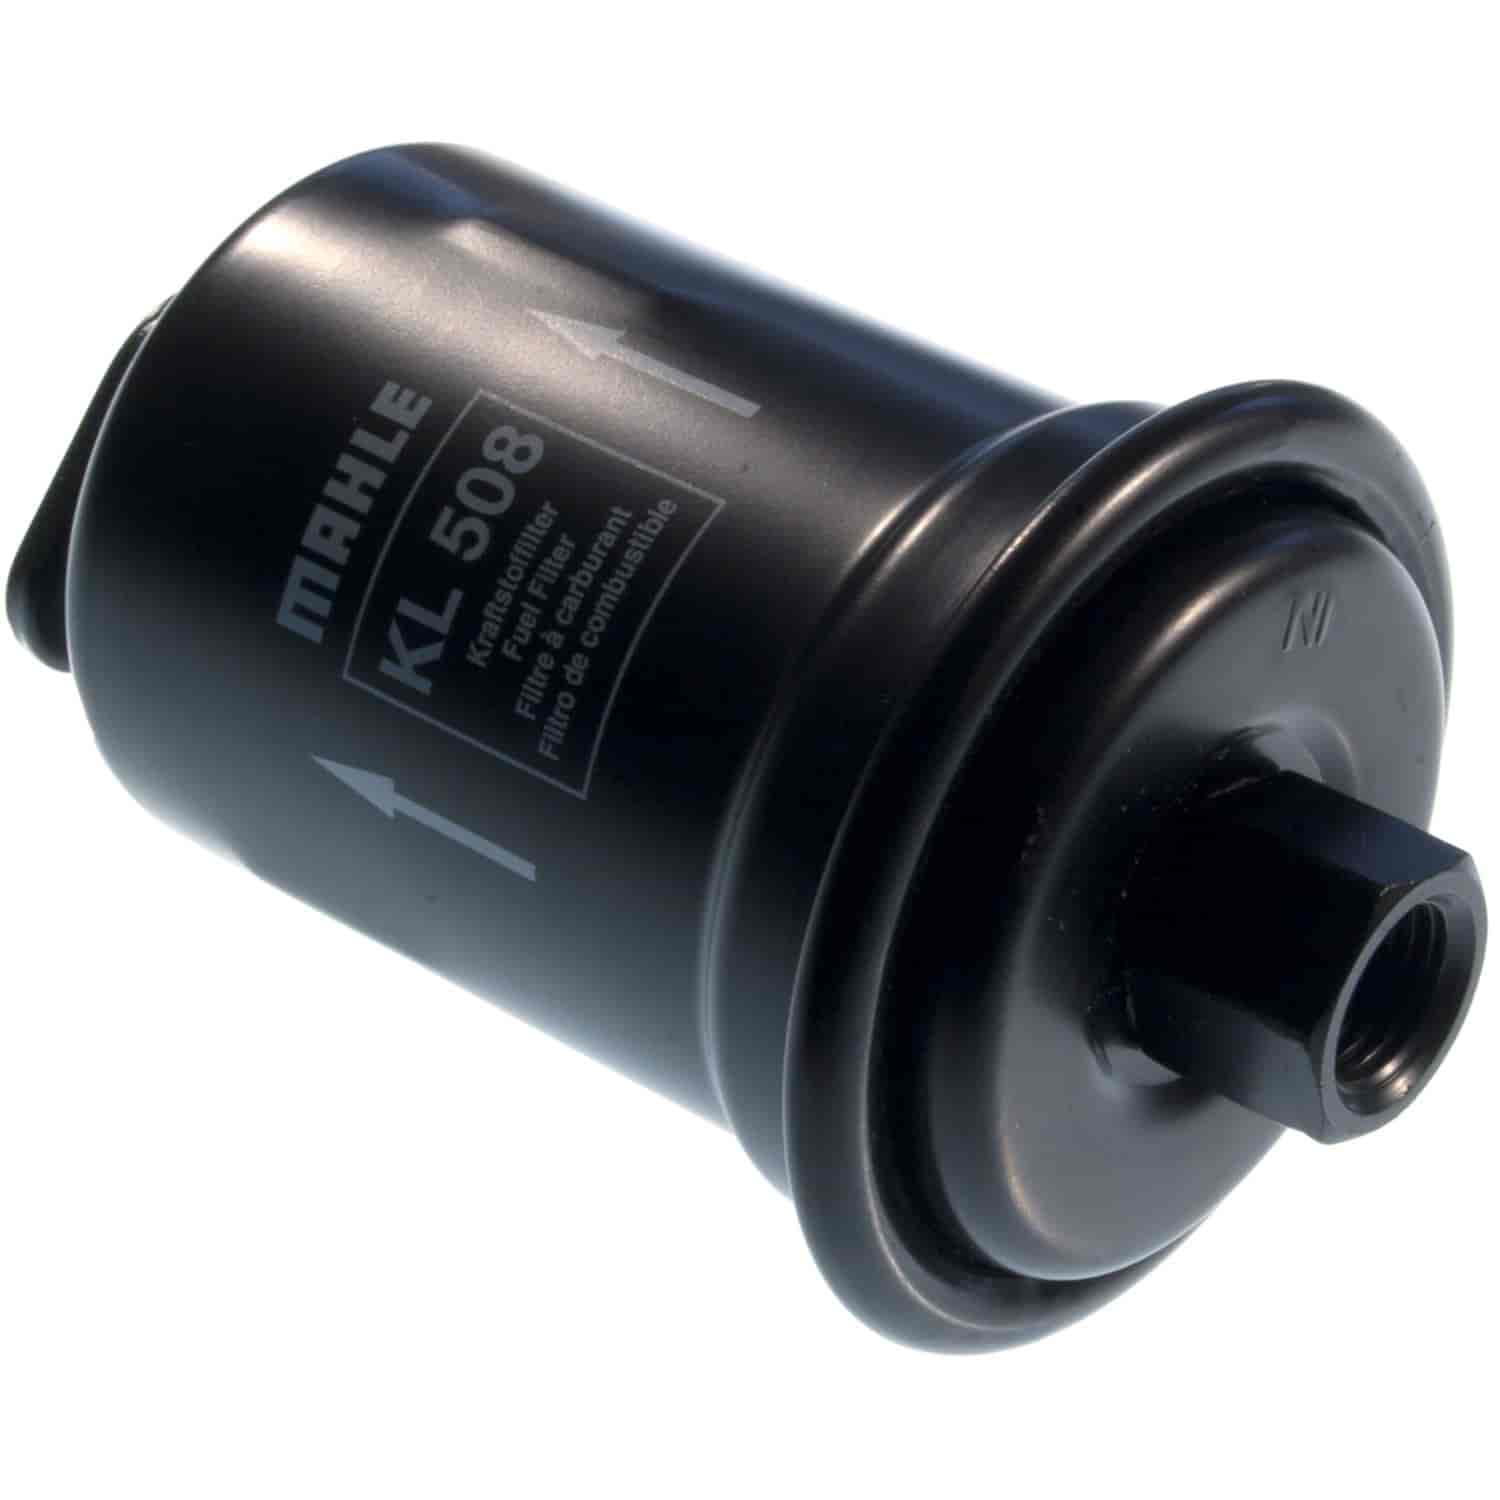 Mahle Fuel Filter for Hyundai Elantra and Tiburon 1.8L and 2.0L 96-04